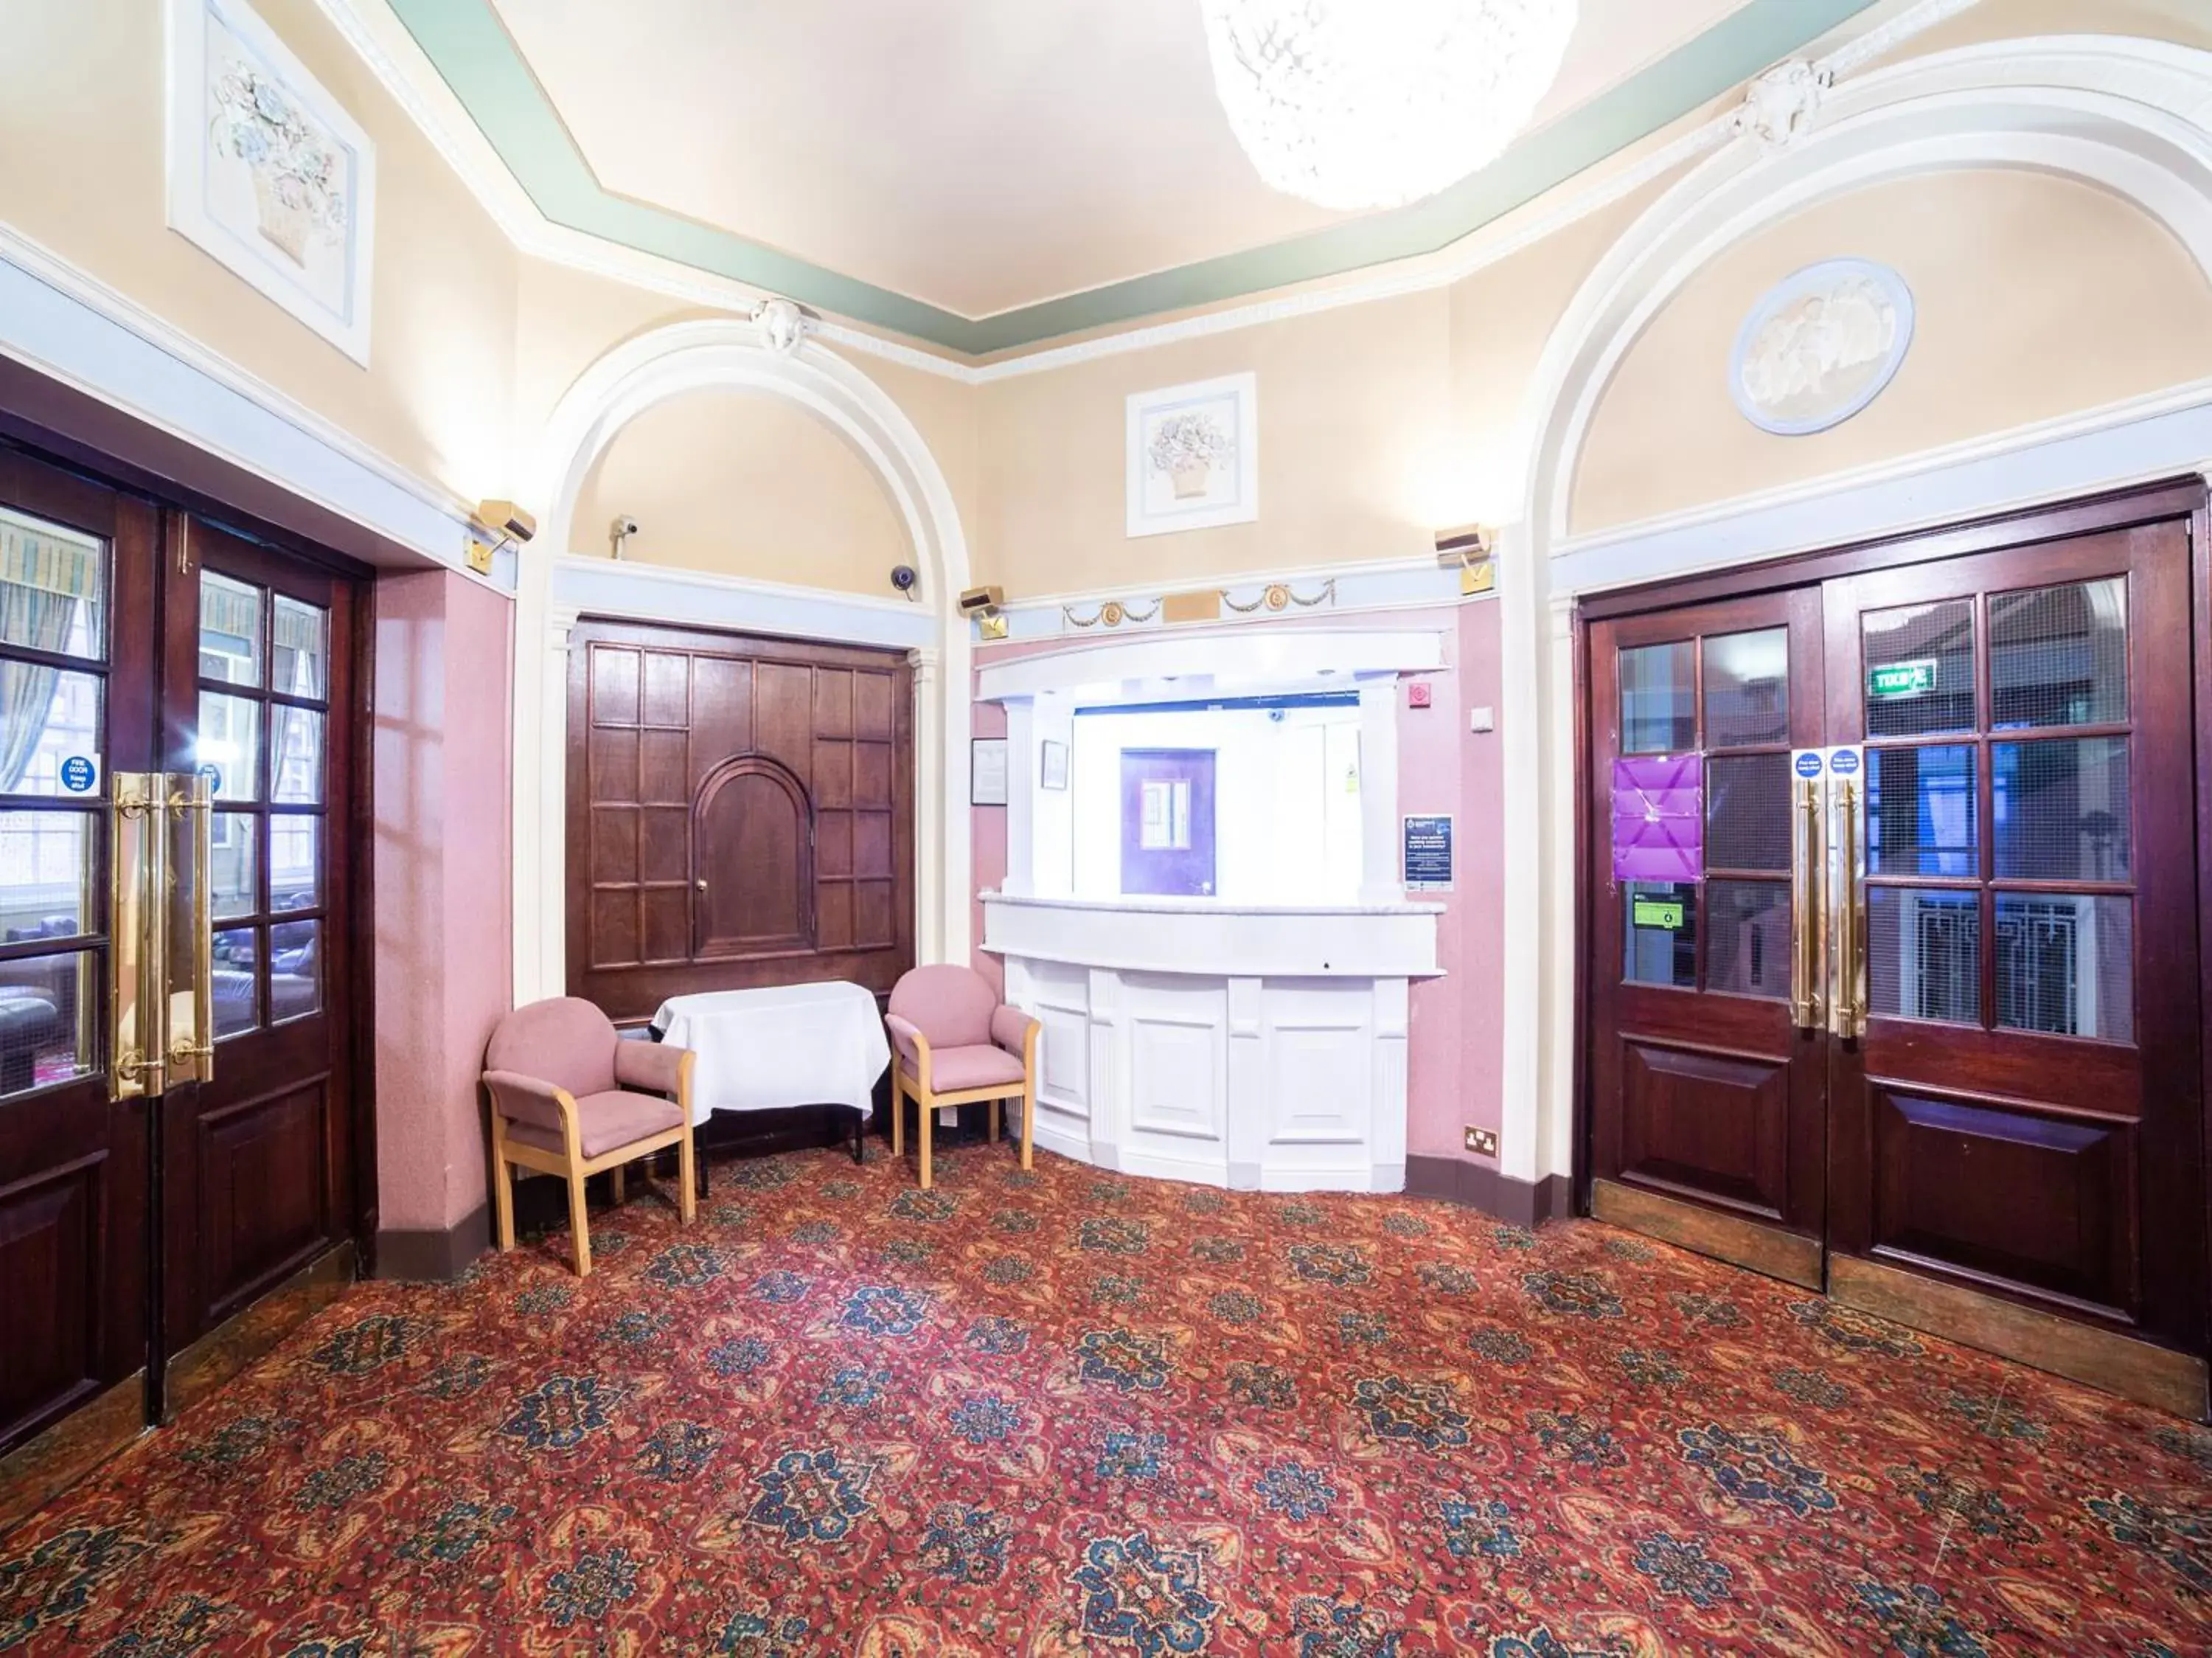 Lobby or reception in George Hotel, Burslem, Stoke-on-Trent